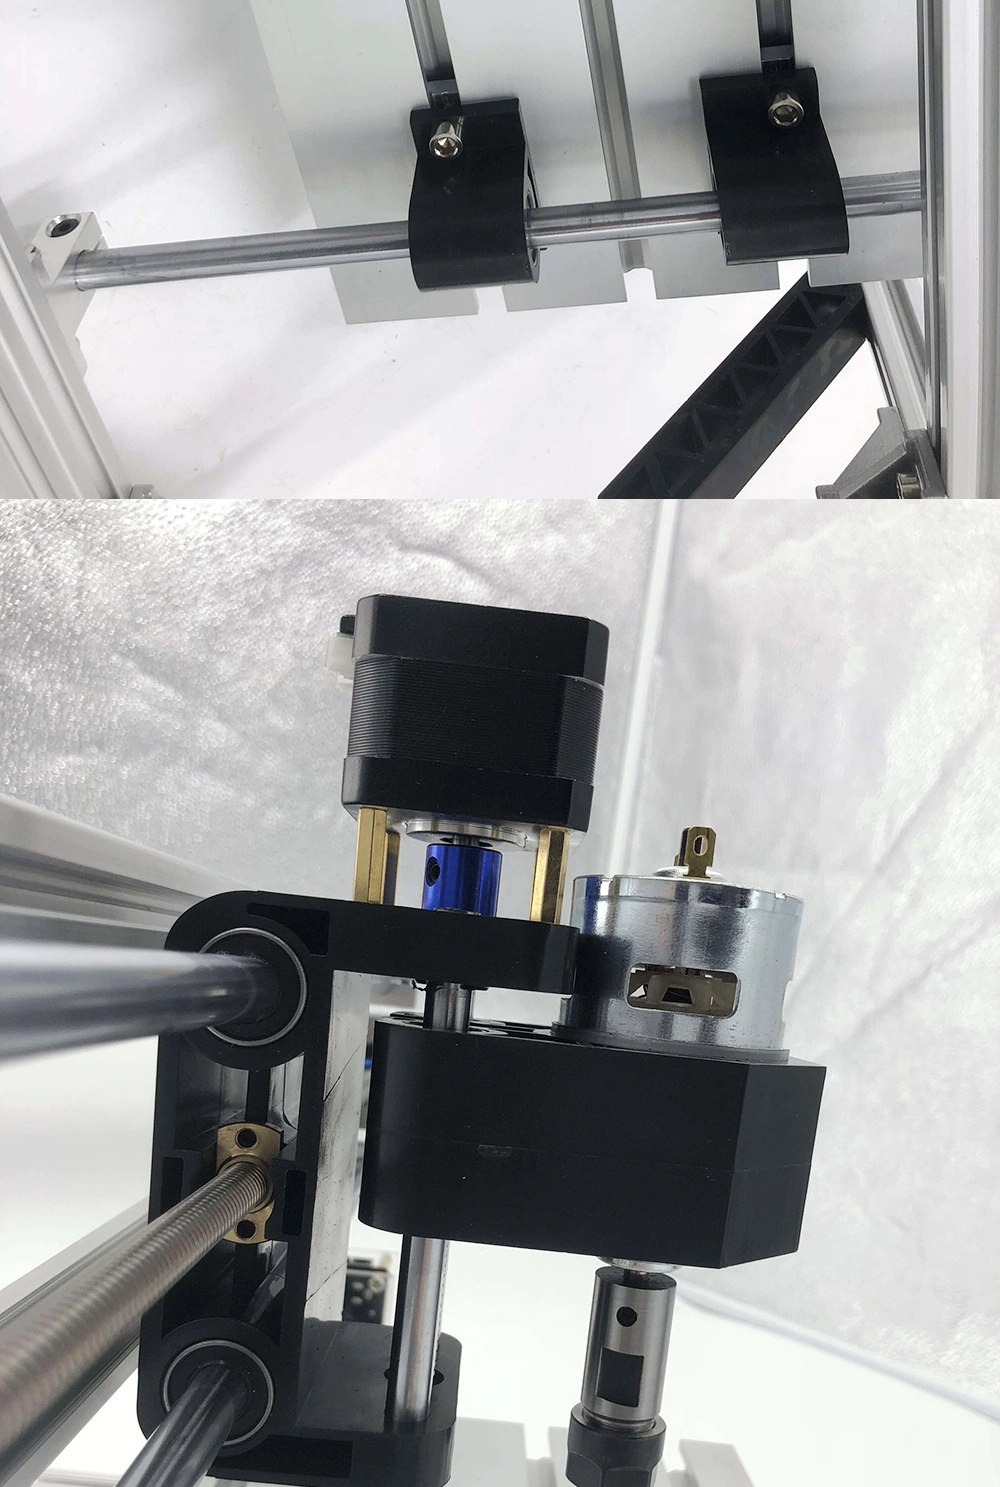 CNC 3018 Engraving Machine 15W Laser for Wood Cutting